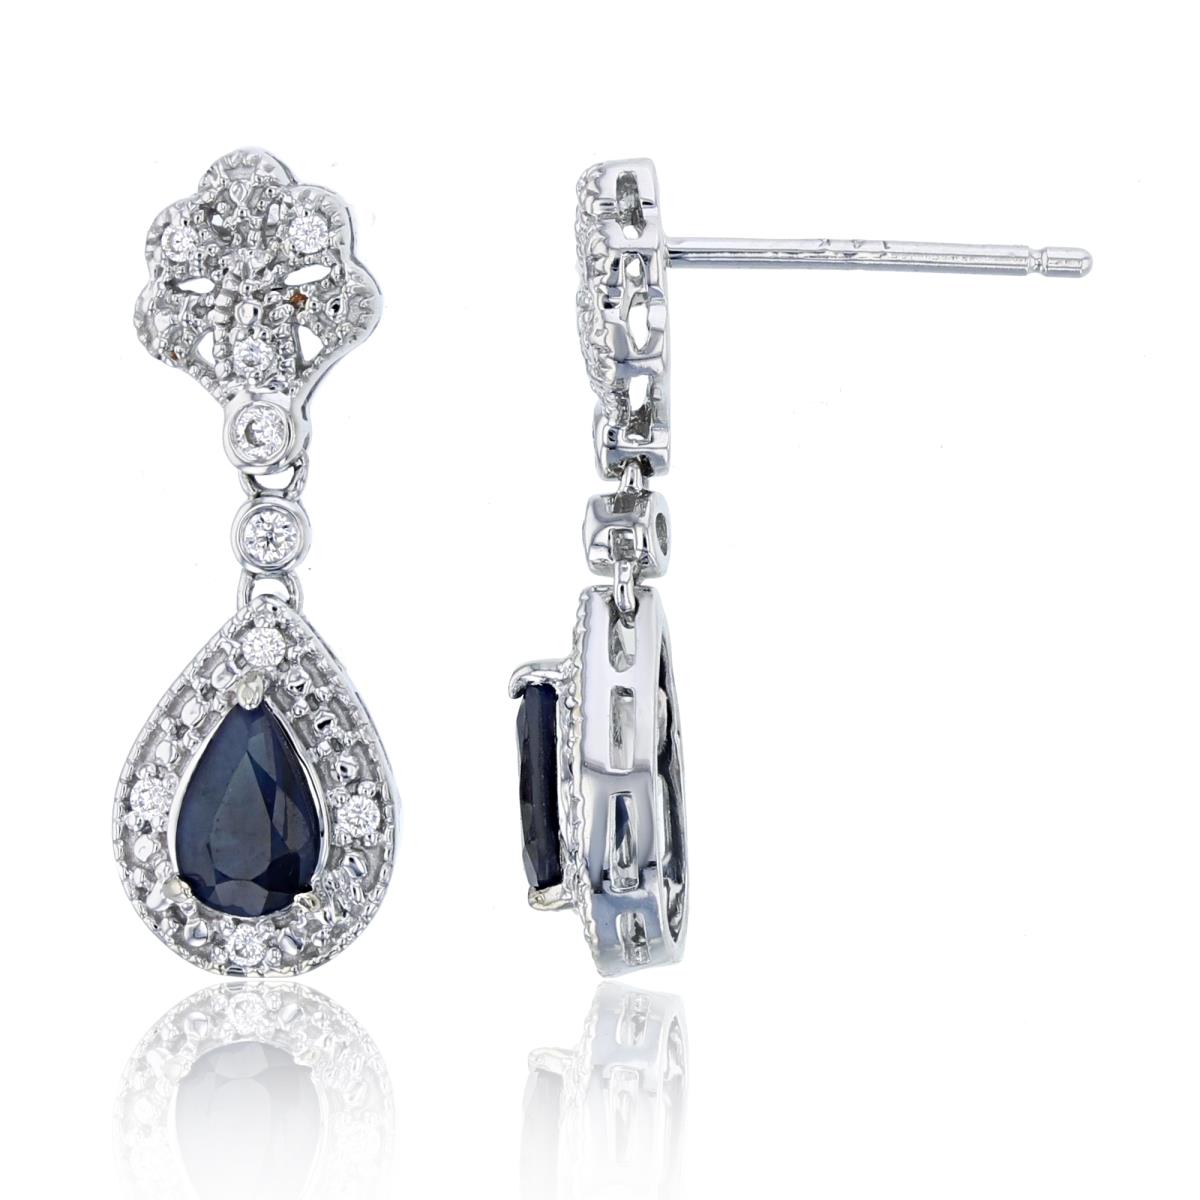 14K White Gold 0.11CTTW Rnd Diamonds & 6x4mm PS Sapphire Dangling Earring